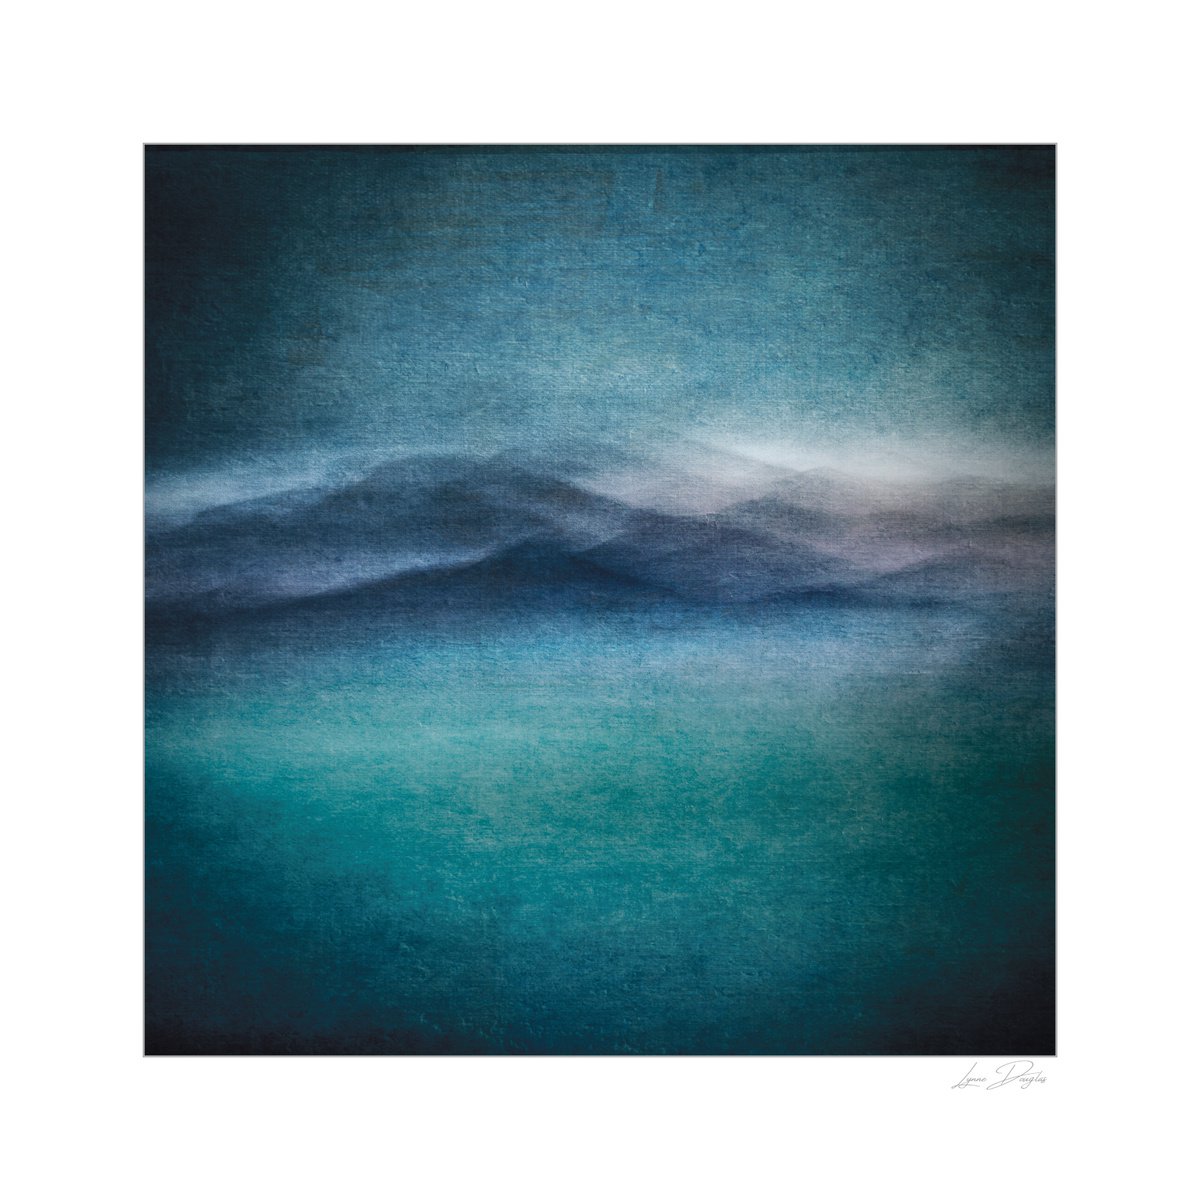 Island Tapestry - Isle of Skye Photography Print by Lynne Douglas